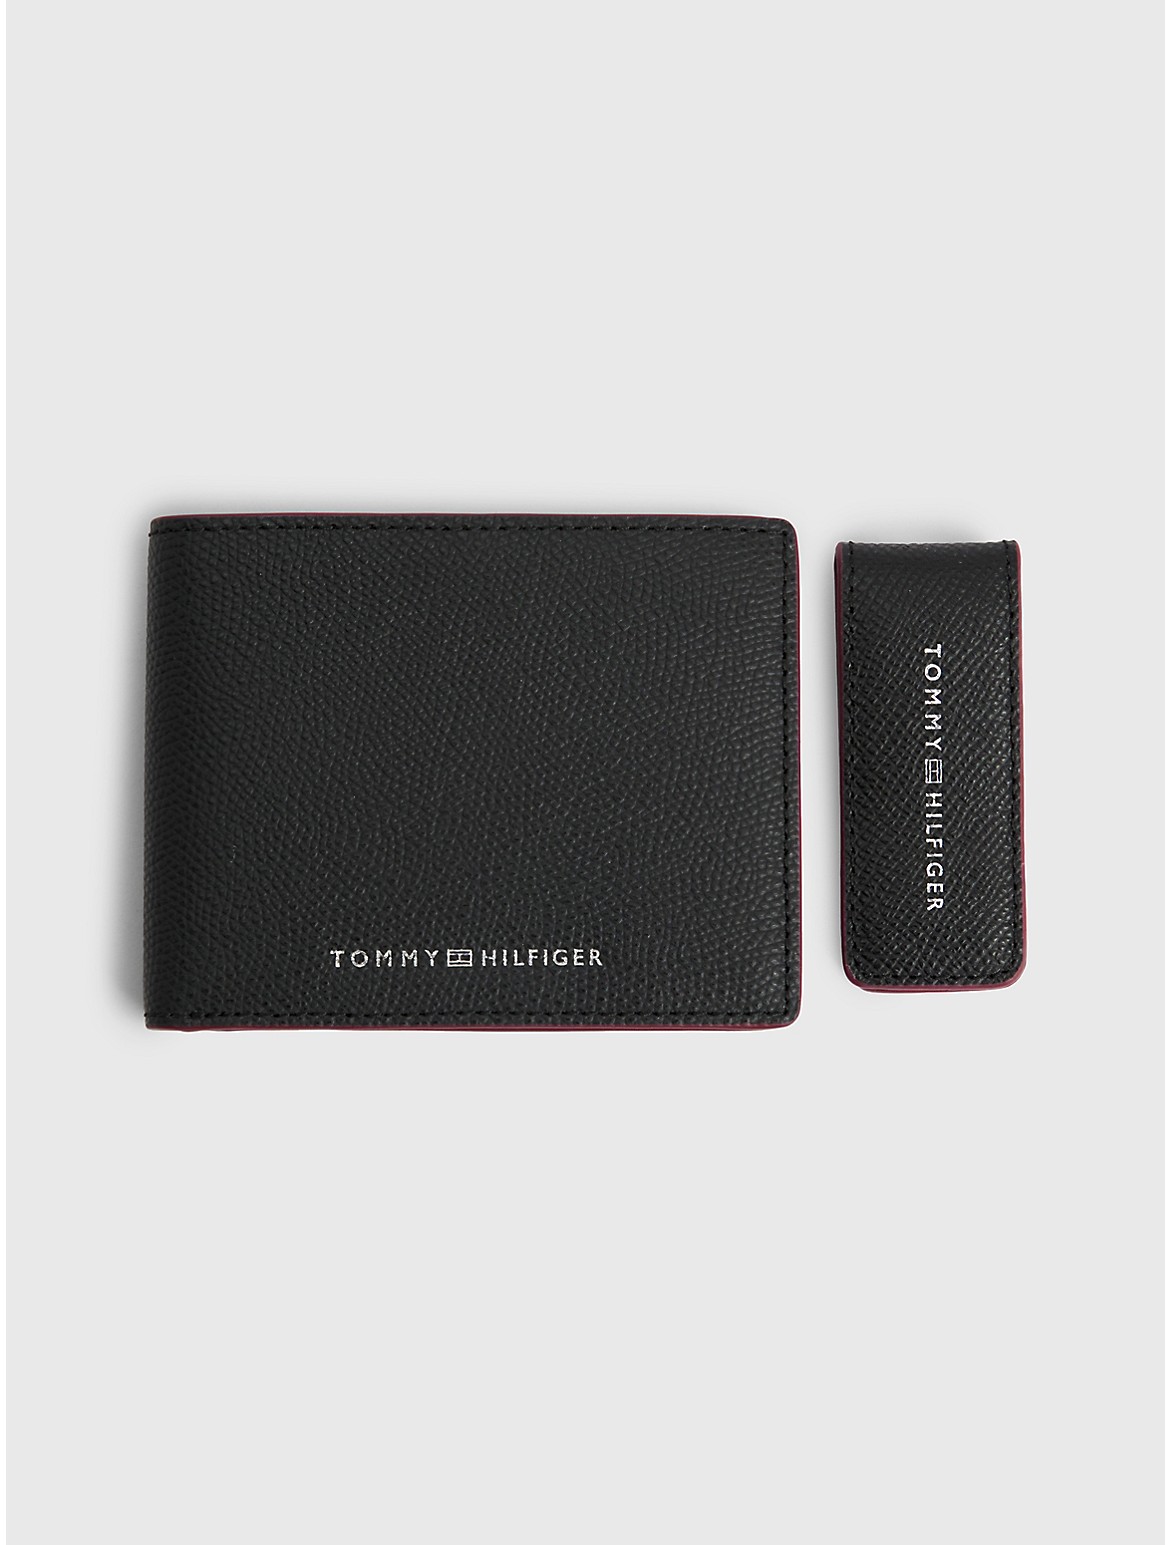 Tommy Hilfiger Men's Leather Mini Card Wallet and Money Clip Set - Black